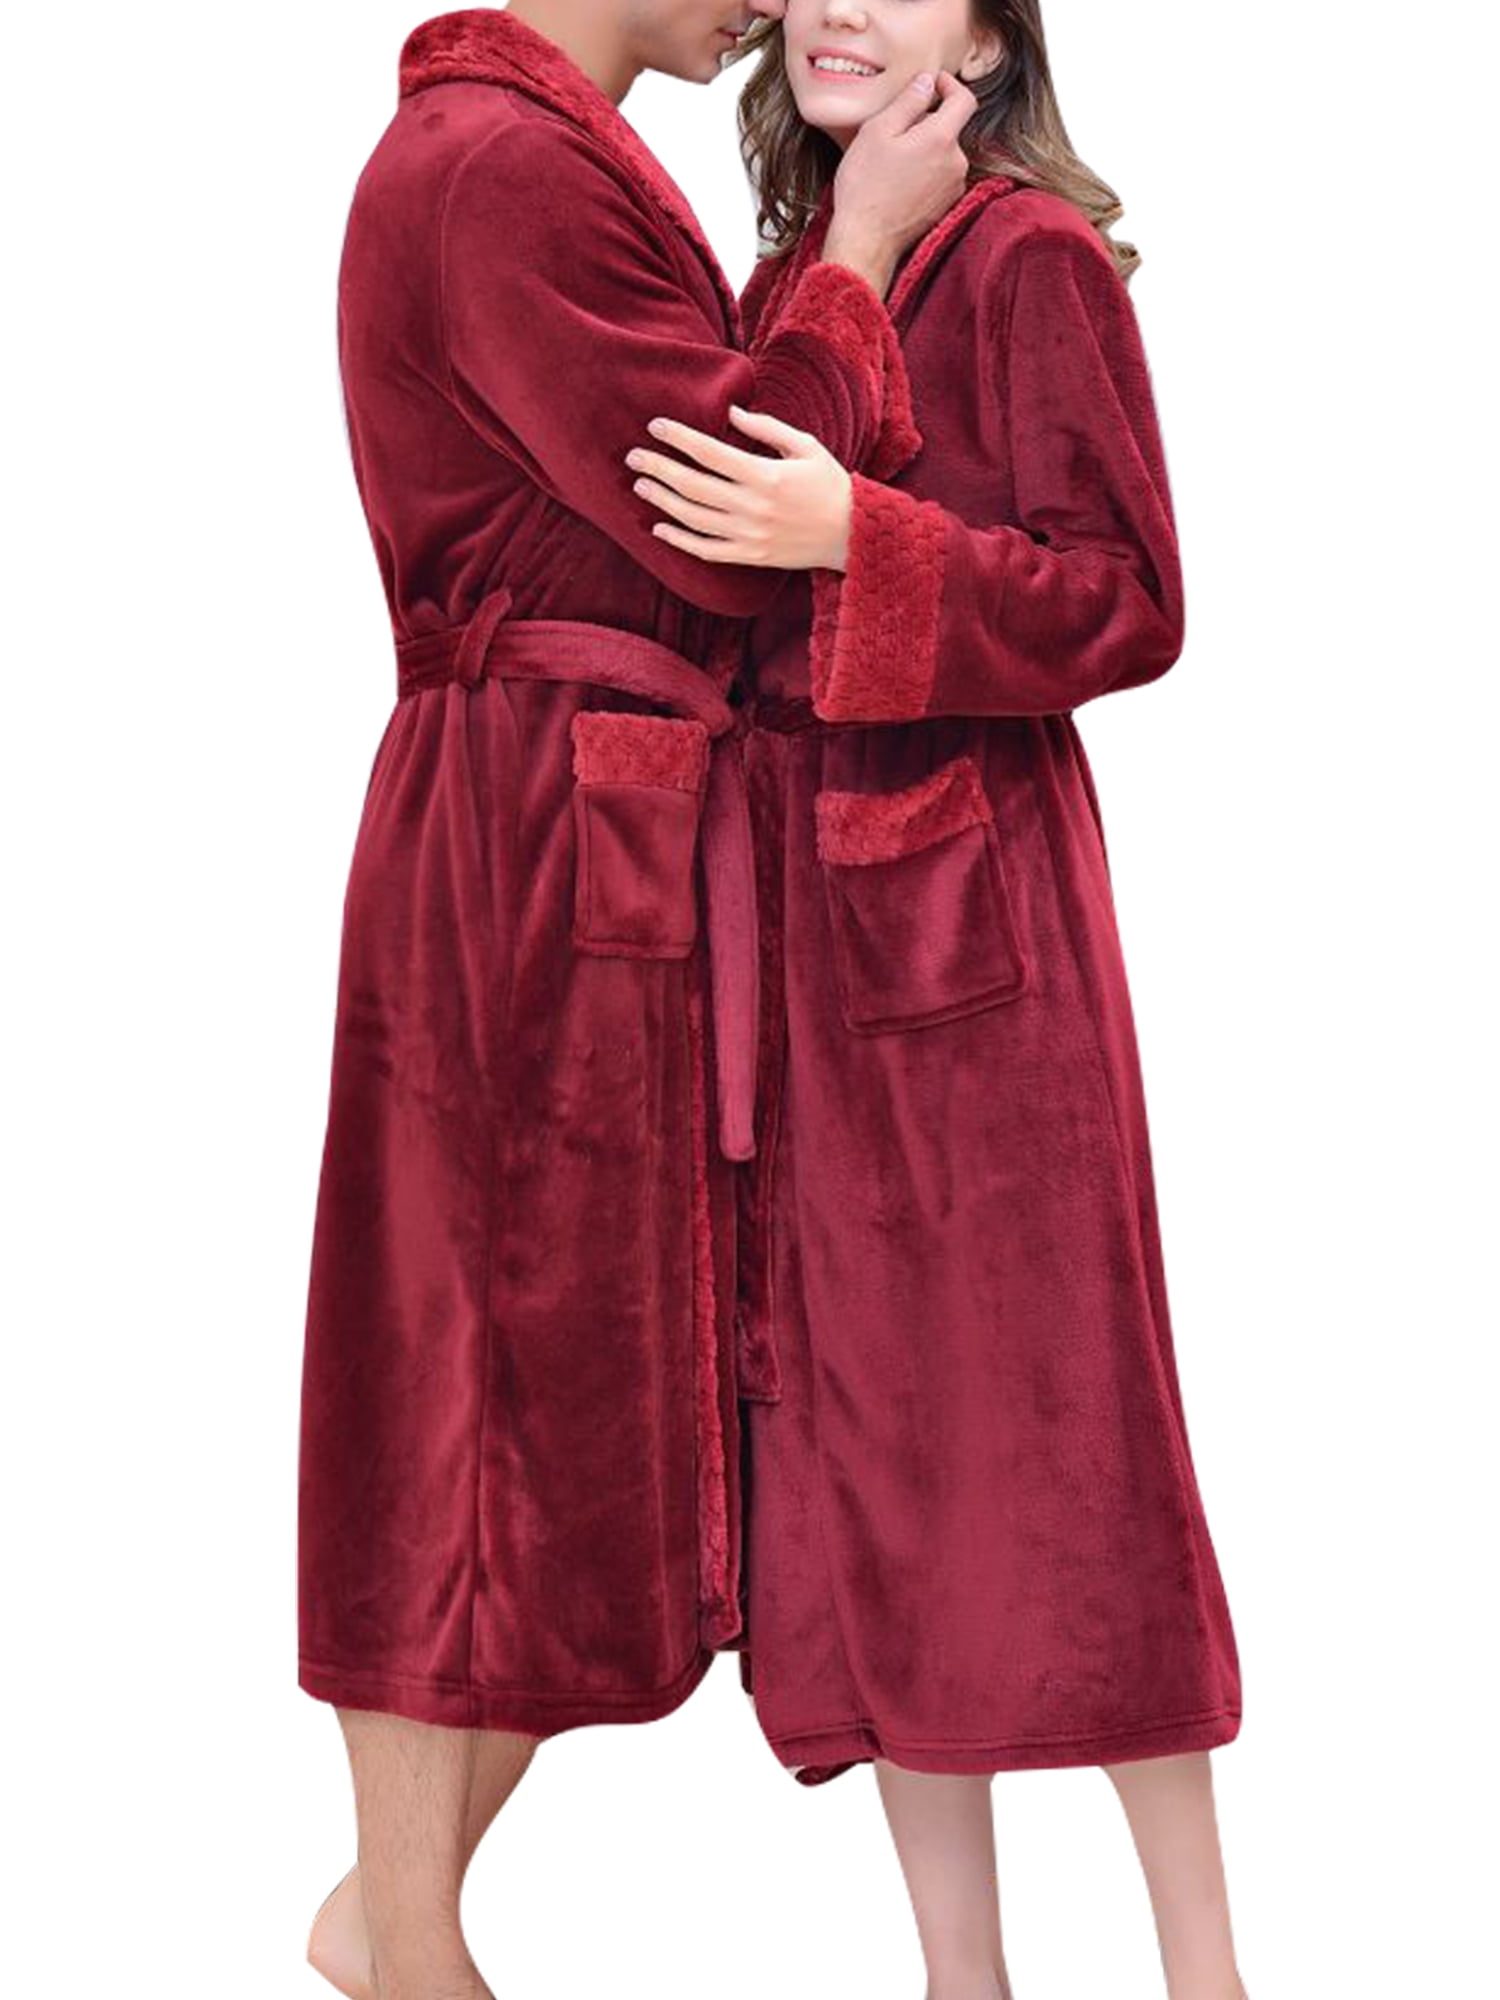 Mens Womens Winter Warm Robes Fluffy Fleece Dressing Gown Long Sleepwear Lounge  Housecoat Fuzzy Bathrobe for Hotel and Spa - AliExpress